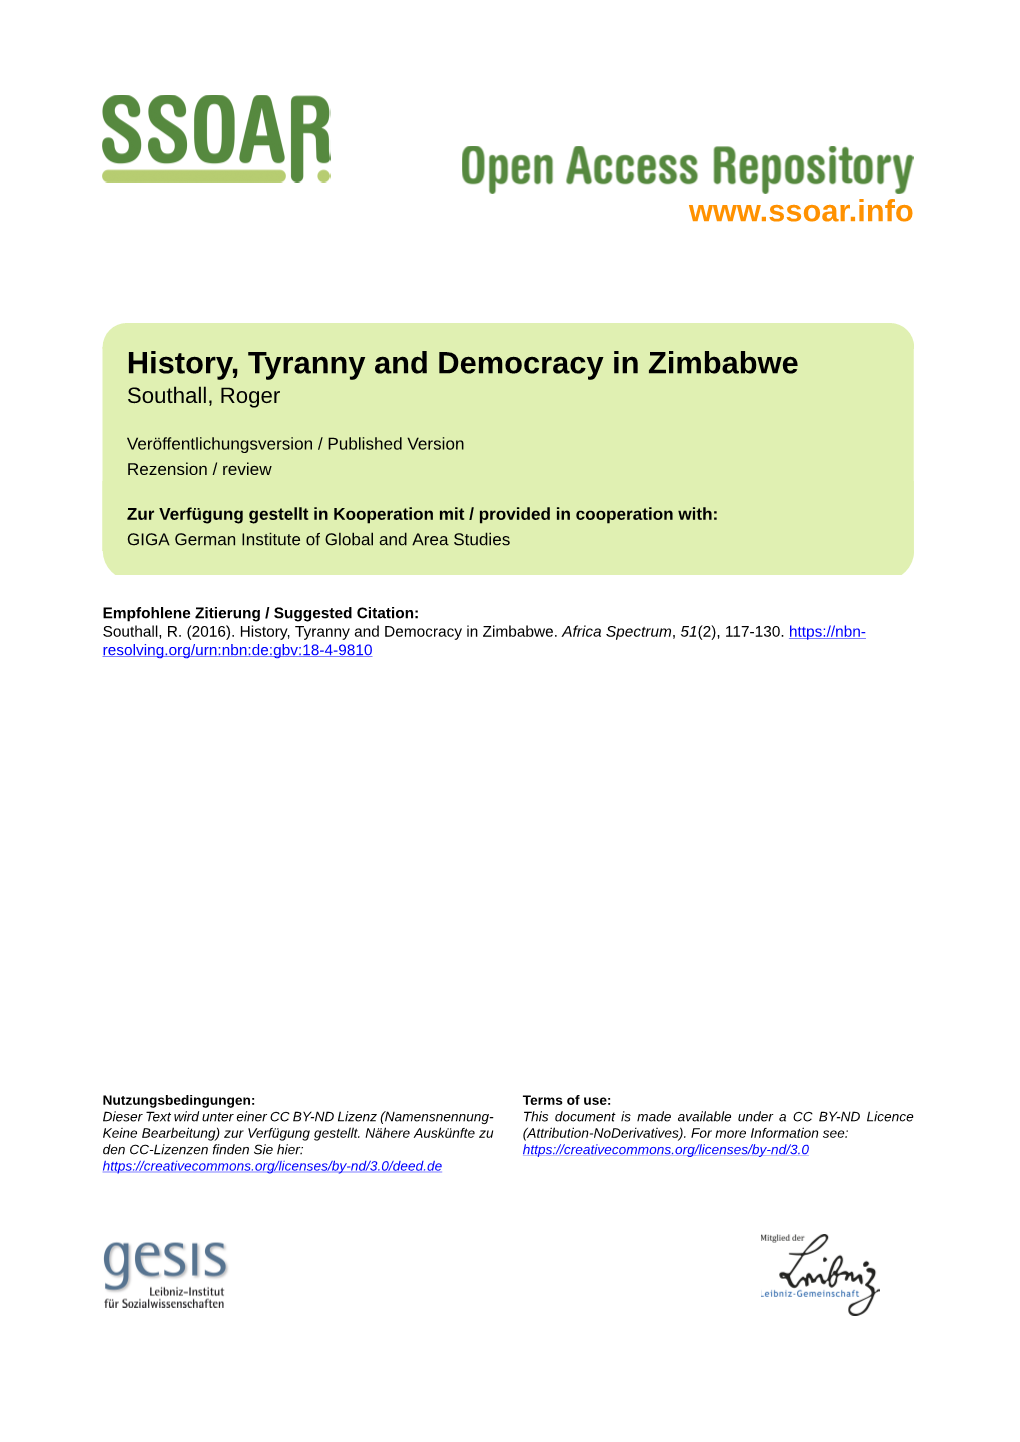 History, Tyranny, and Democracy in Zimbabwe, In: Africa Spectrum, 51, 2, 117–130